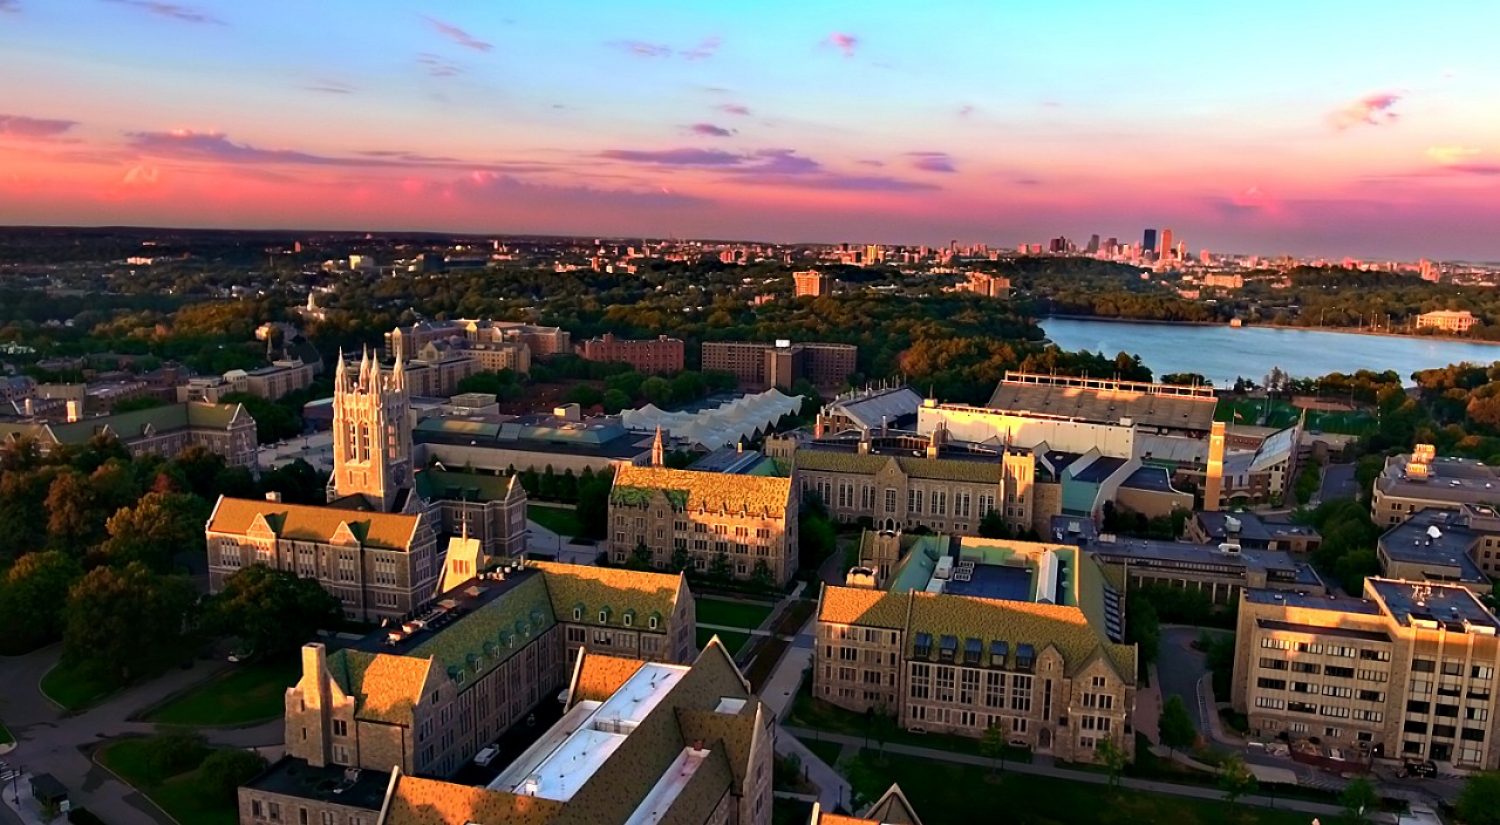 Panoramic view of campus